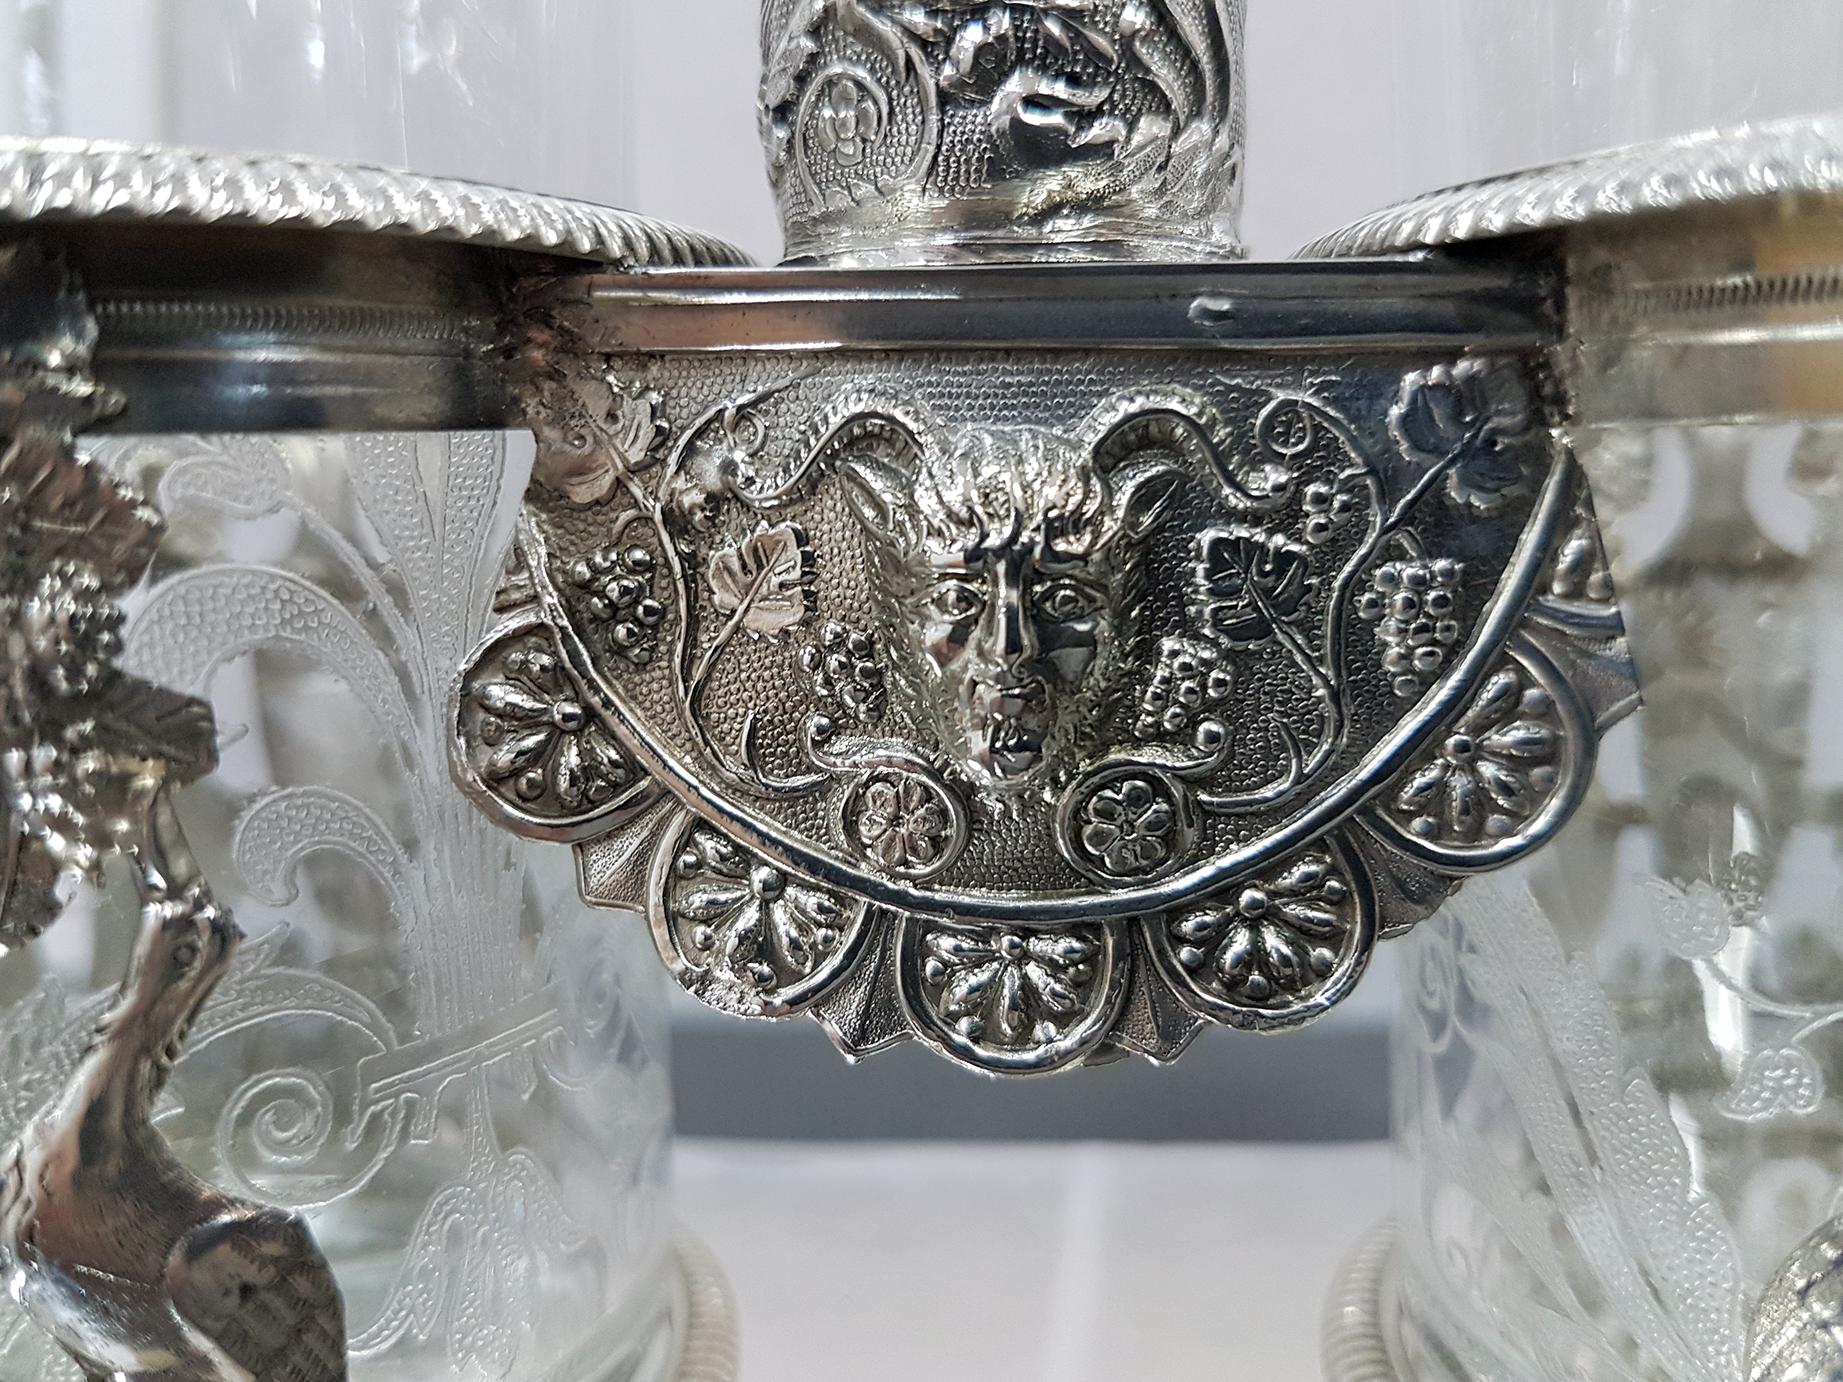 Hand-Crafted Italian Silver 950 Cruet by Gioanni Gilardi, Silversmith in Turin, 1824